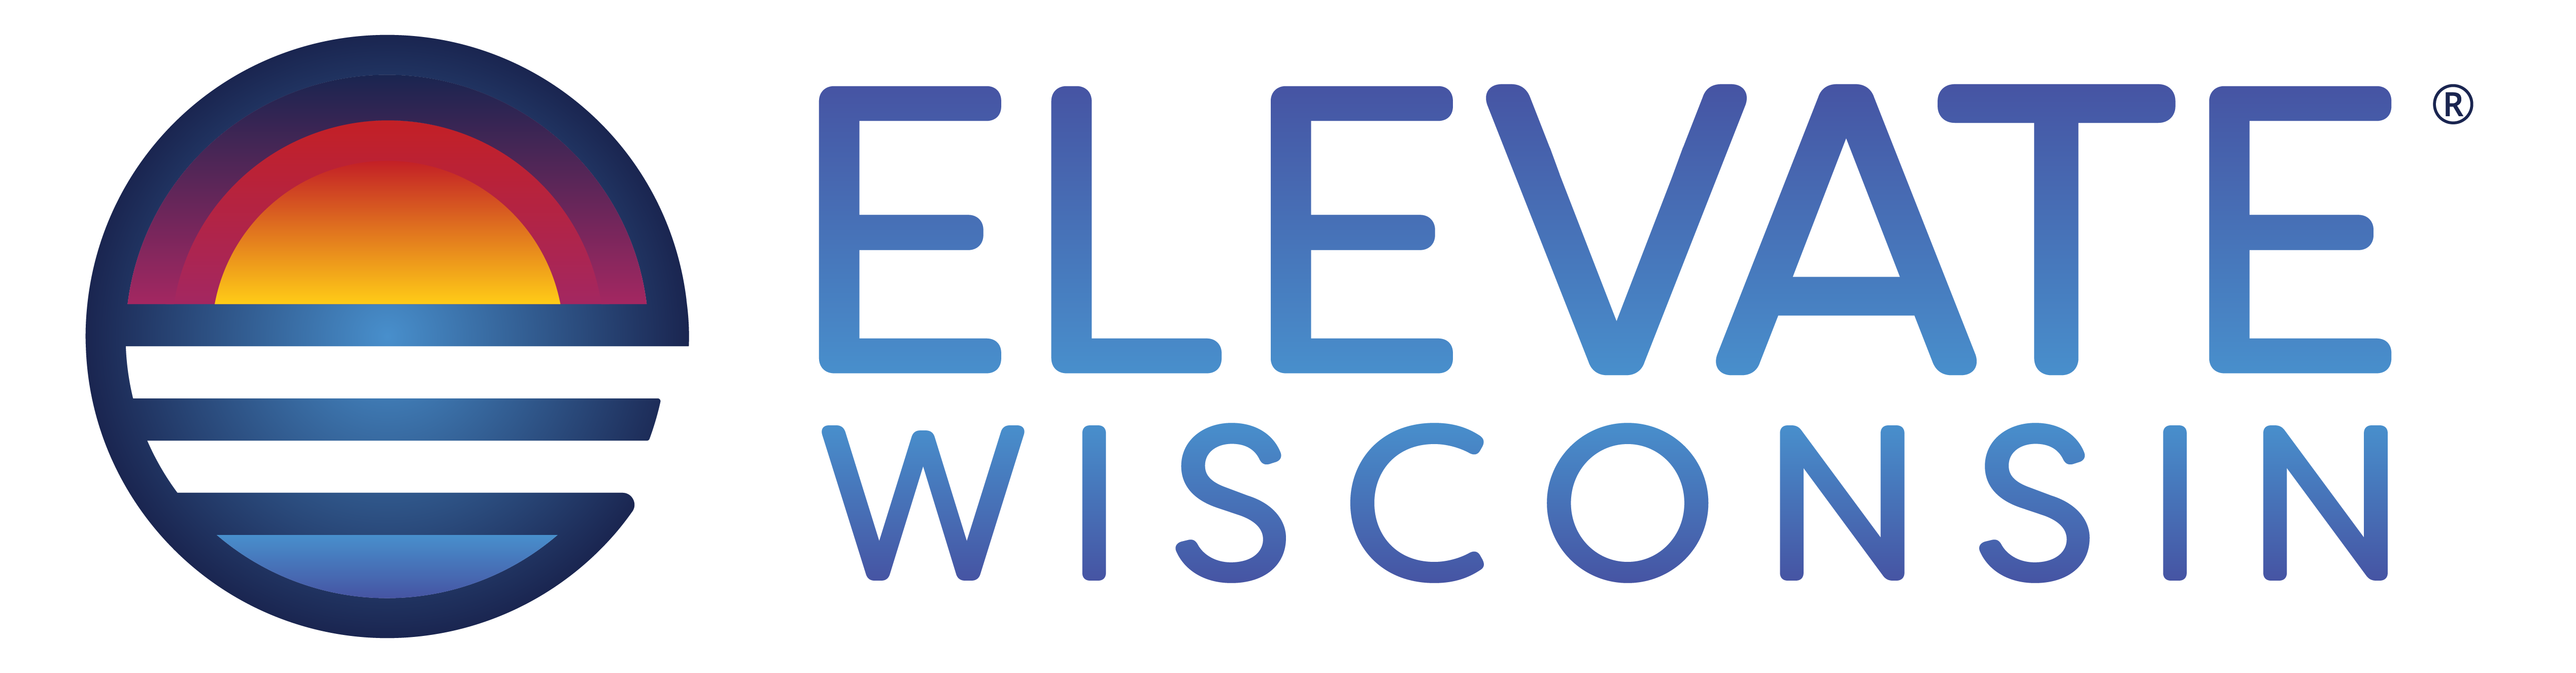 ELEVEATE Wisconsin Logo Image